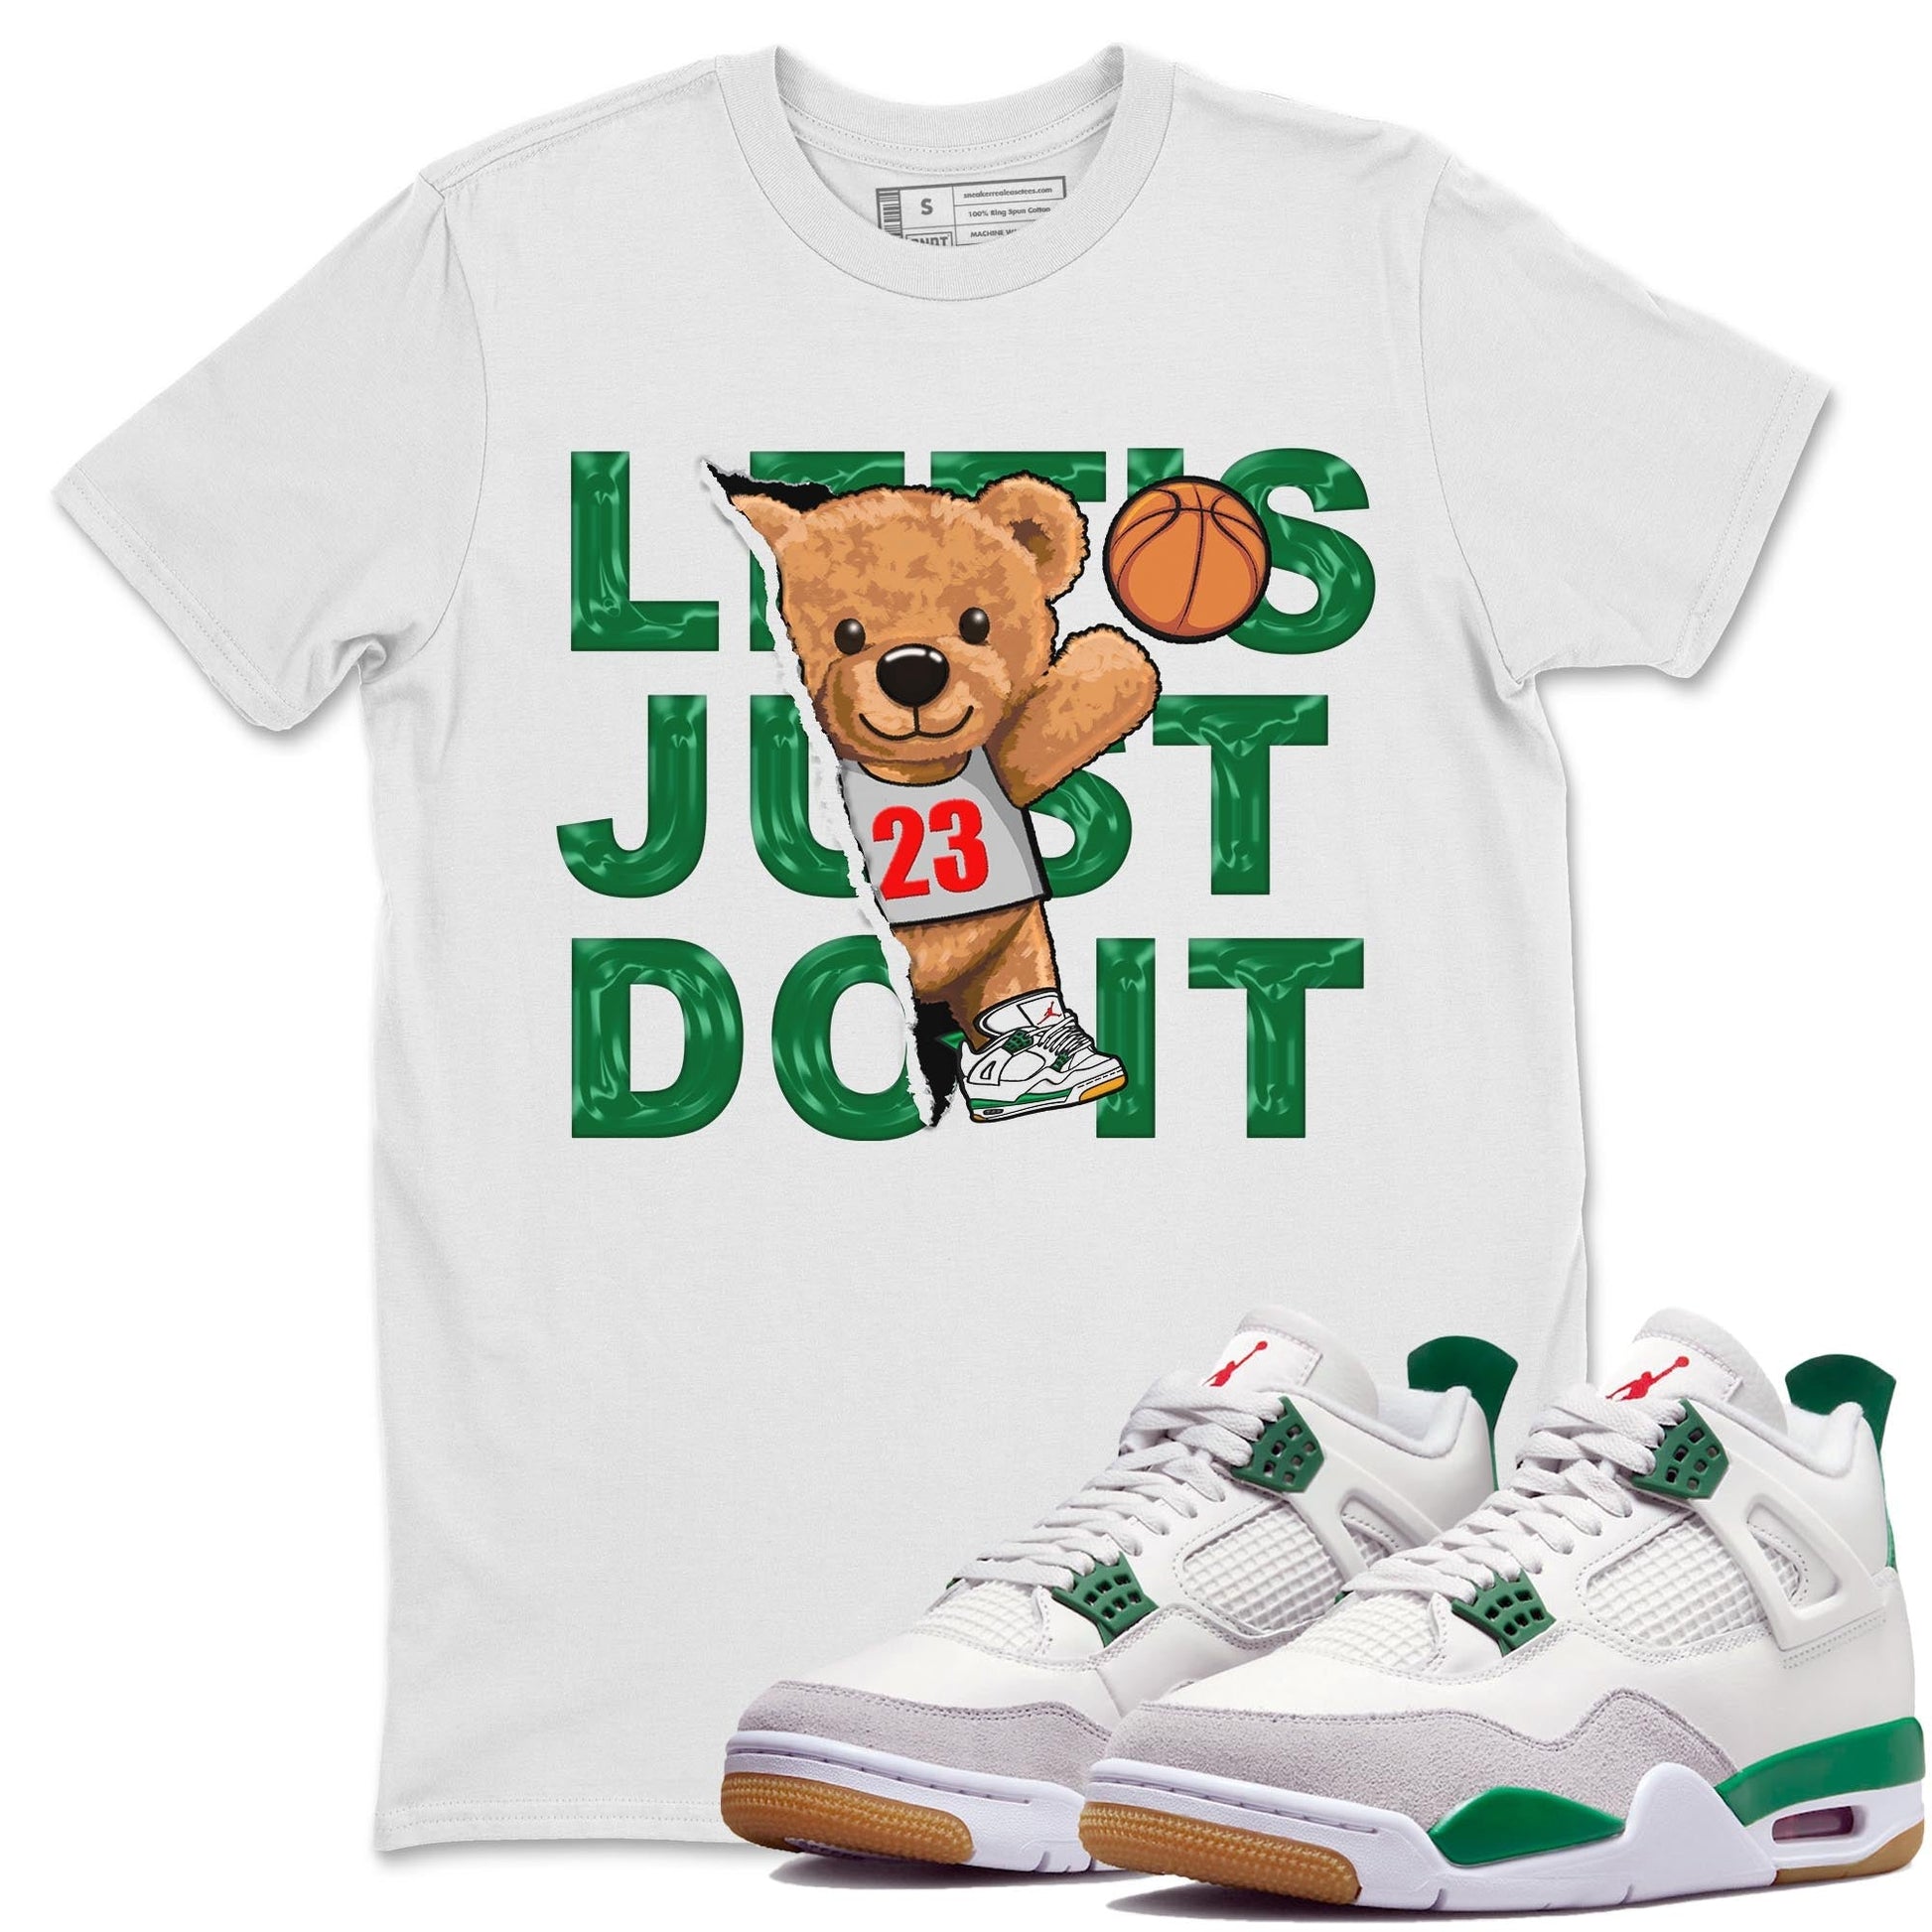 Jordan 4 Pine Green SB Sneaker Match Tees Rip Out Bear Sneaker Tees 4s Pine Green Nike SB Sneaker Tees Sneaker Release Shirts Unisex Shirts White 1